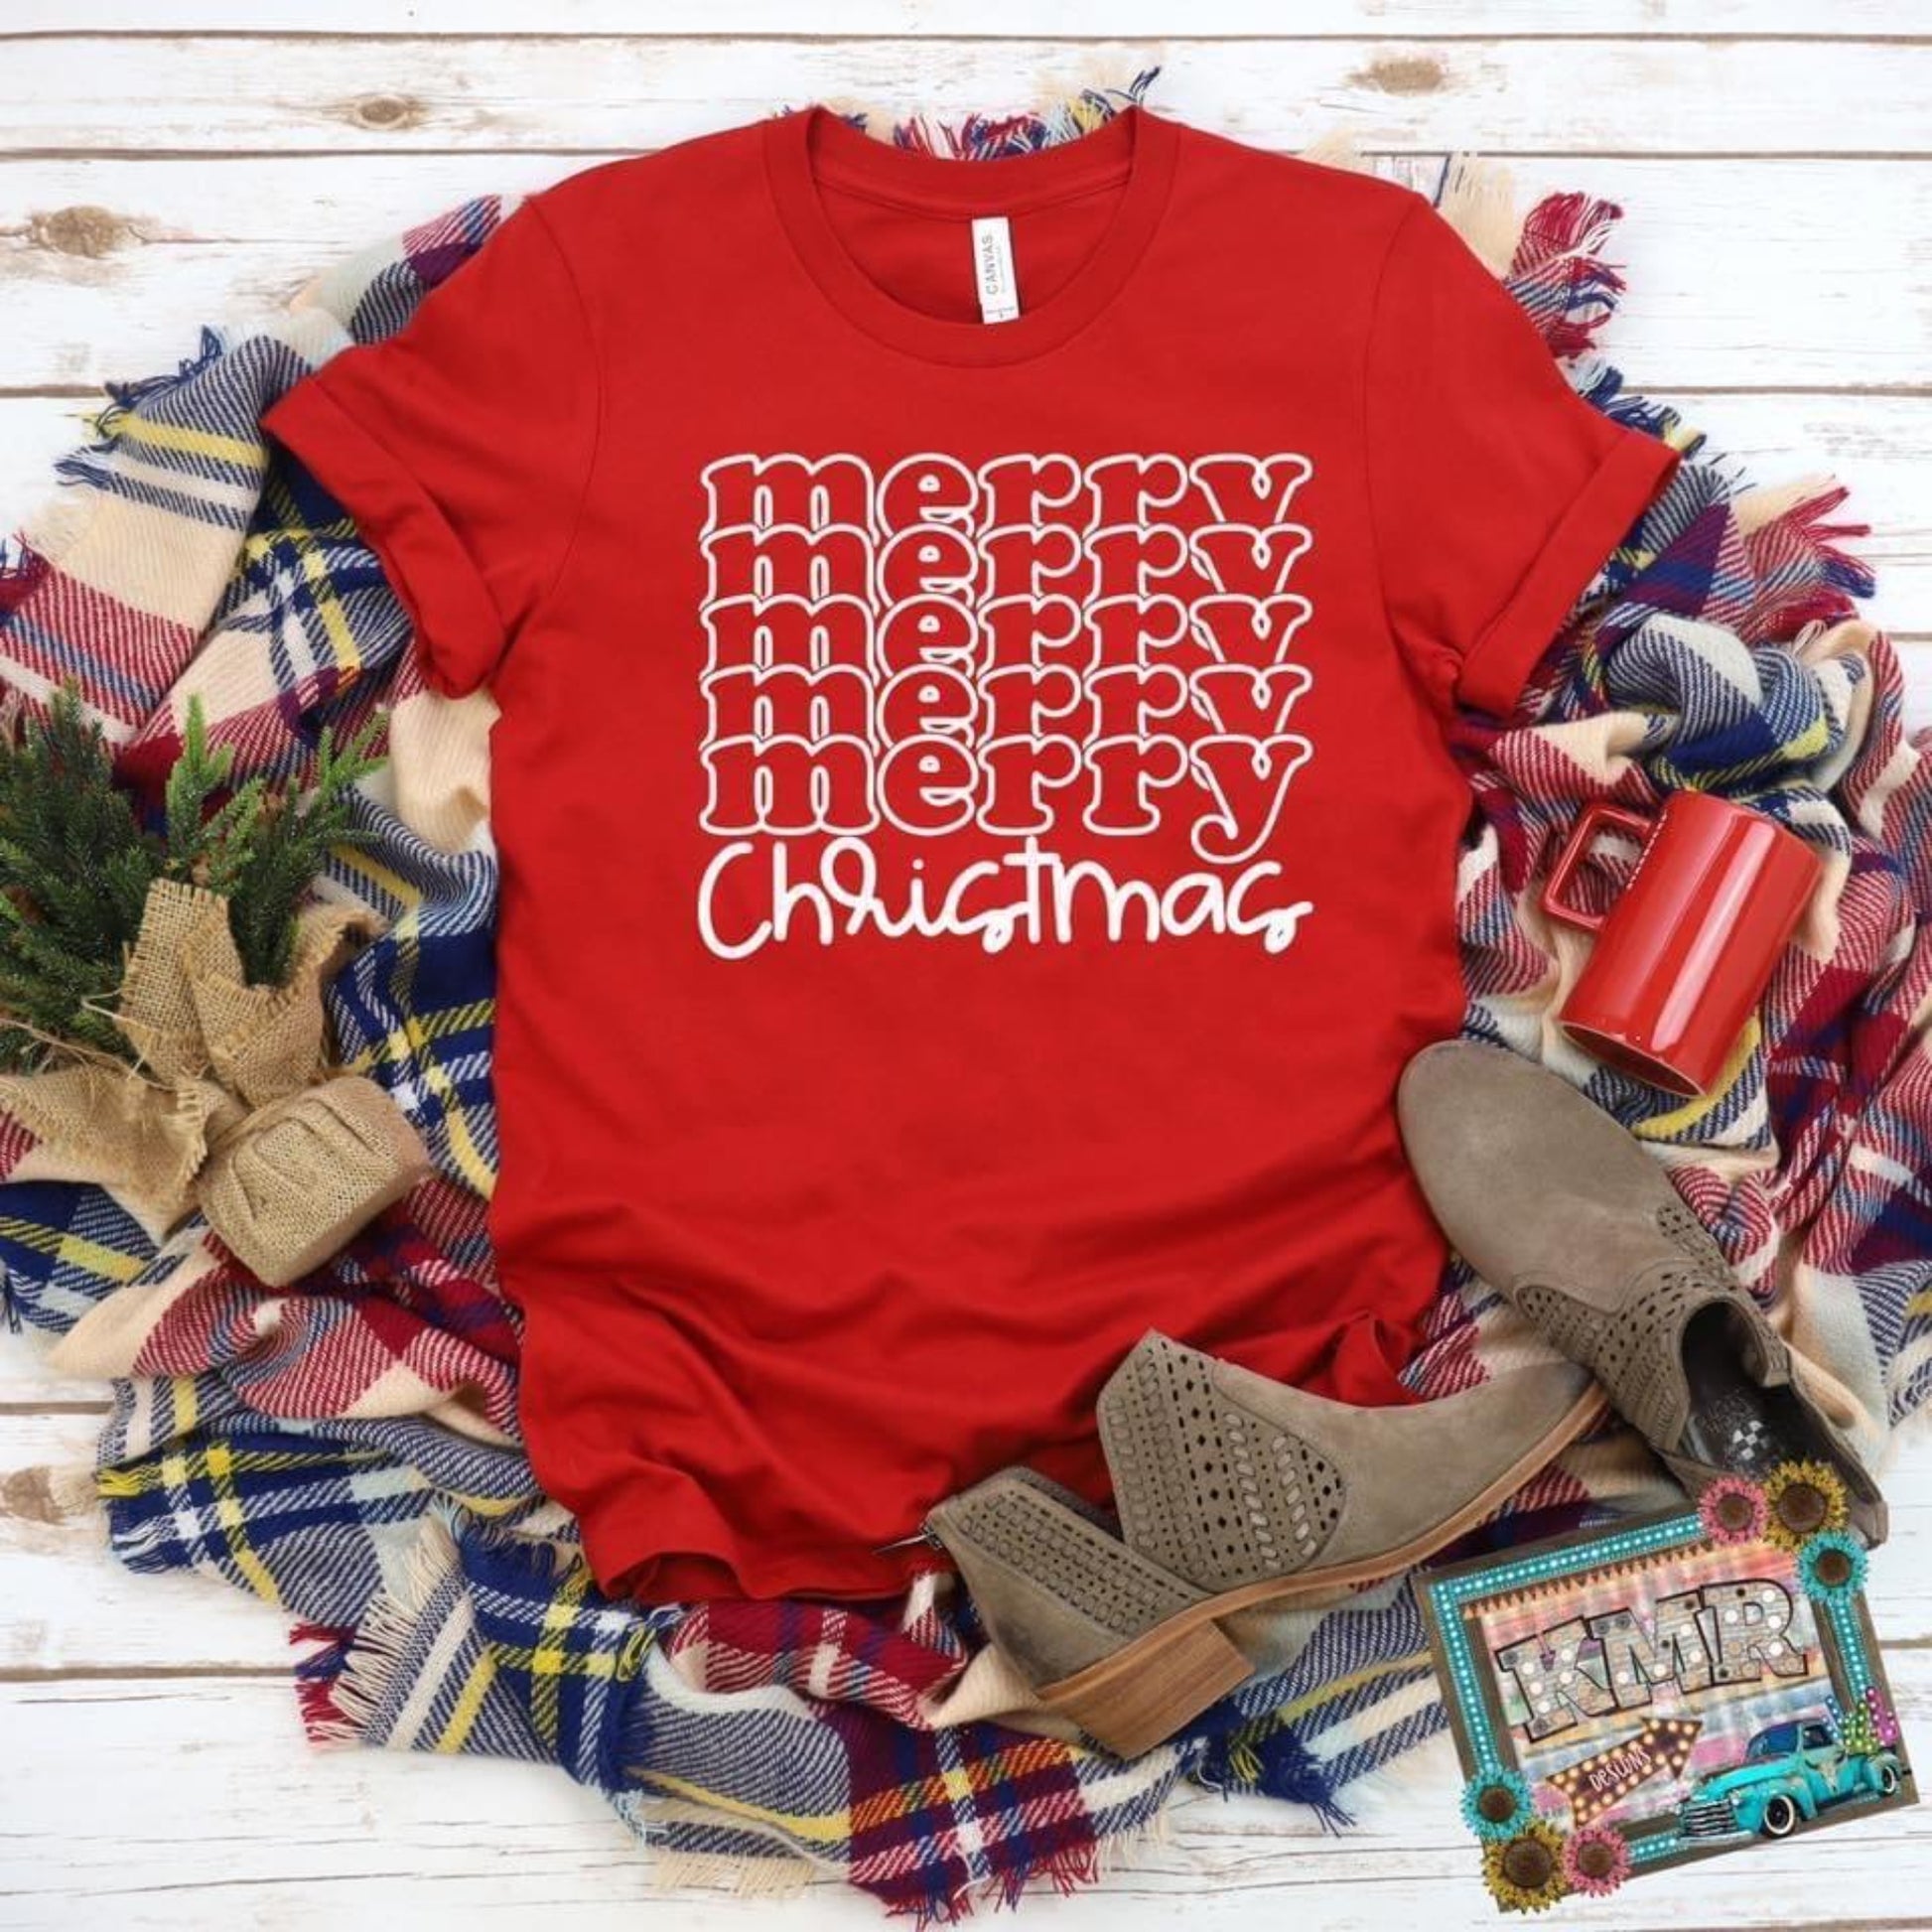 merry_christmas specialty tee christmas tshirt holiday wear casual shirt